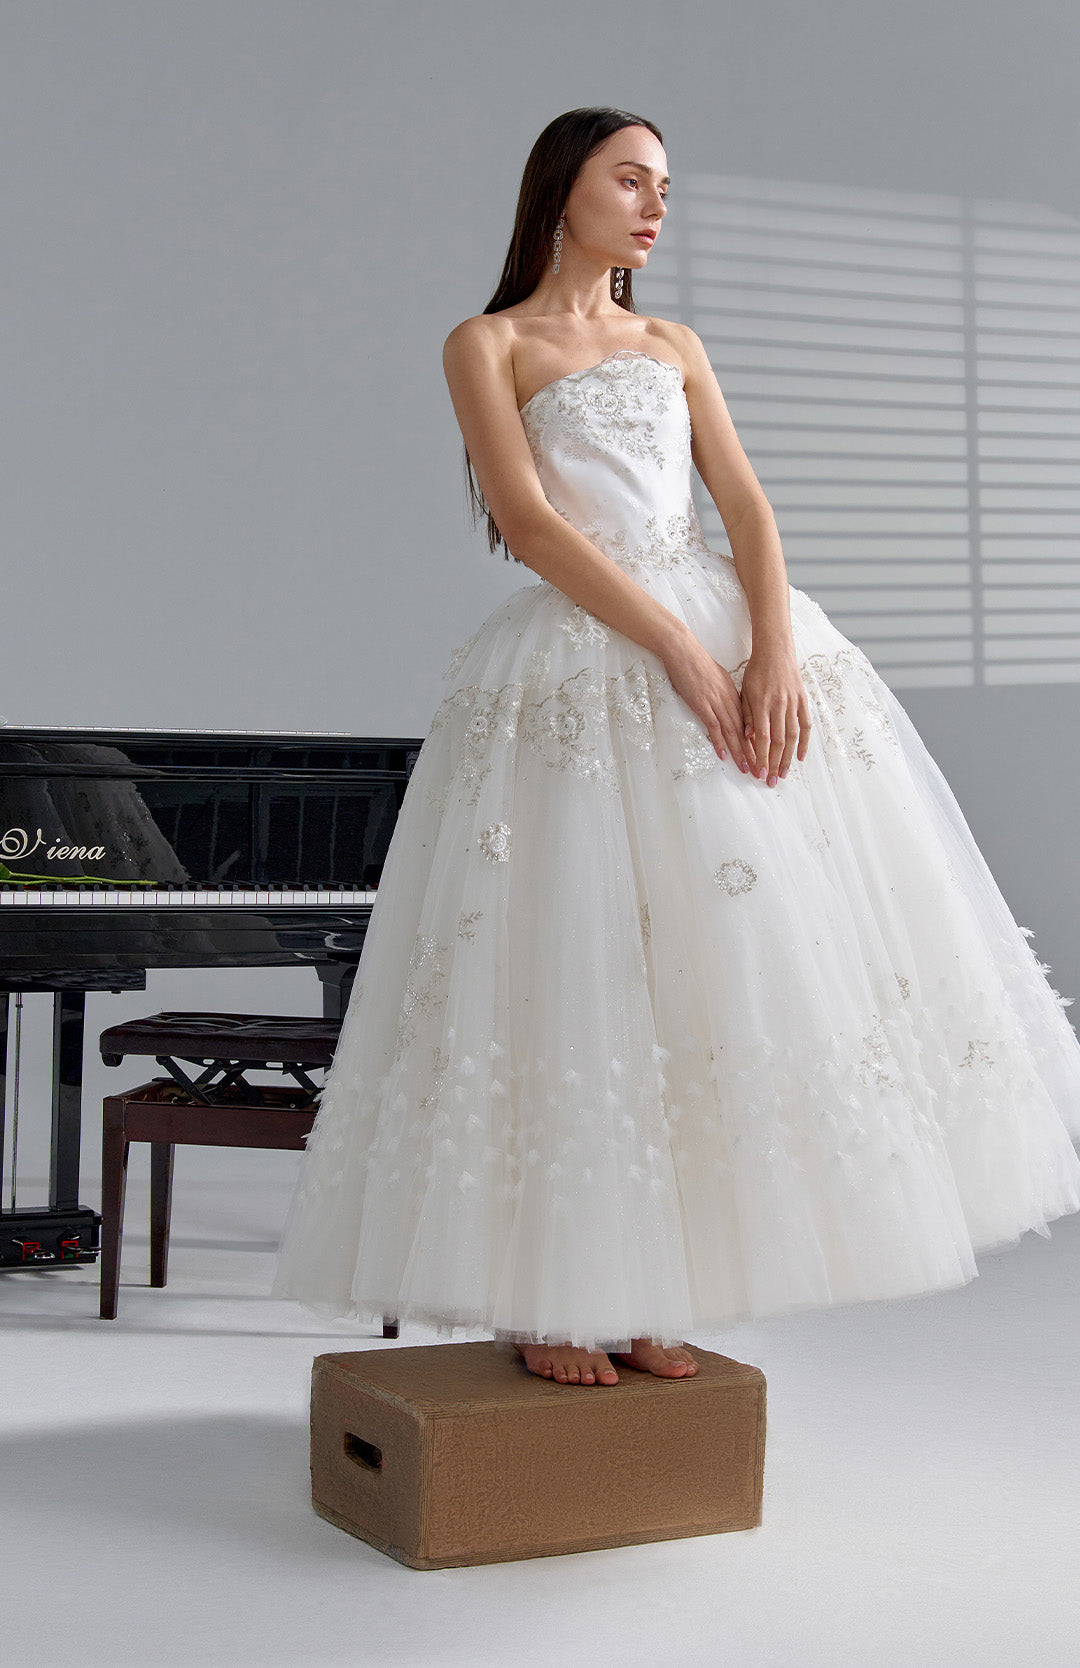 Jane Love - French Lace Strapless Wedding Dress